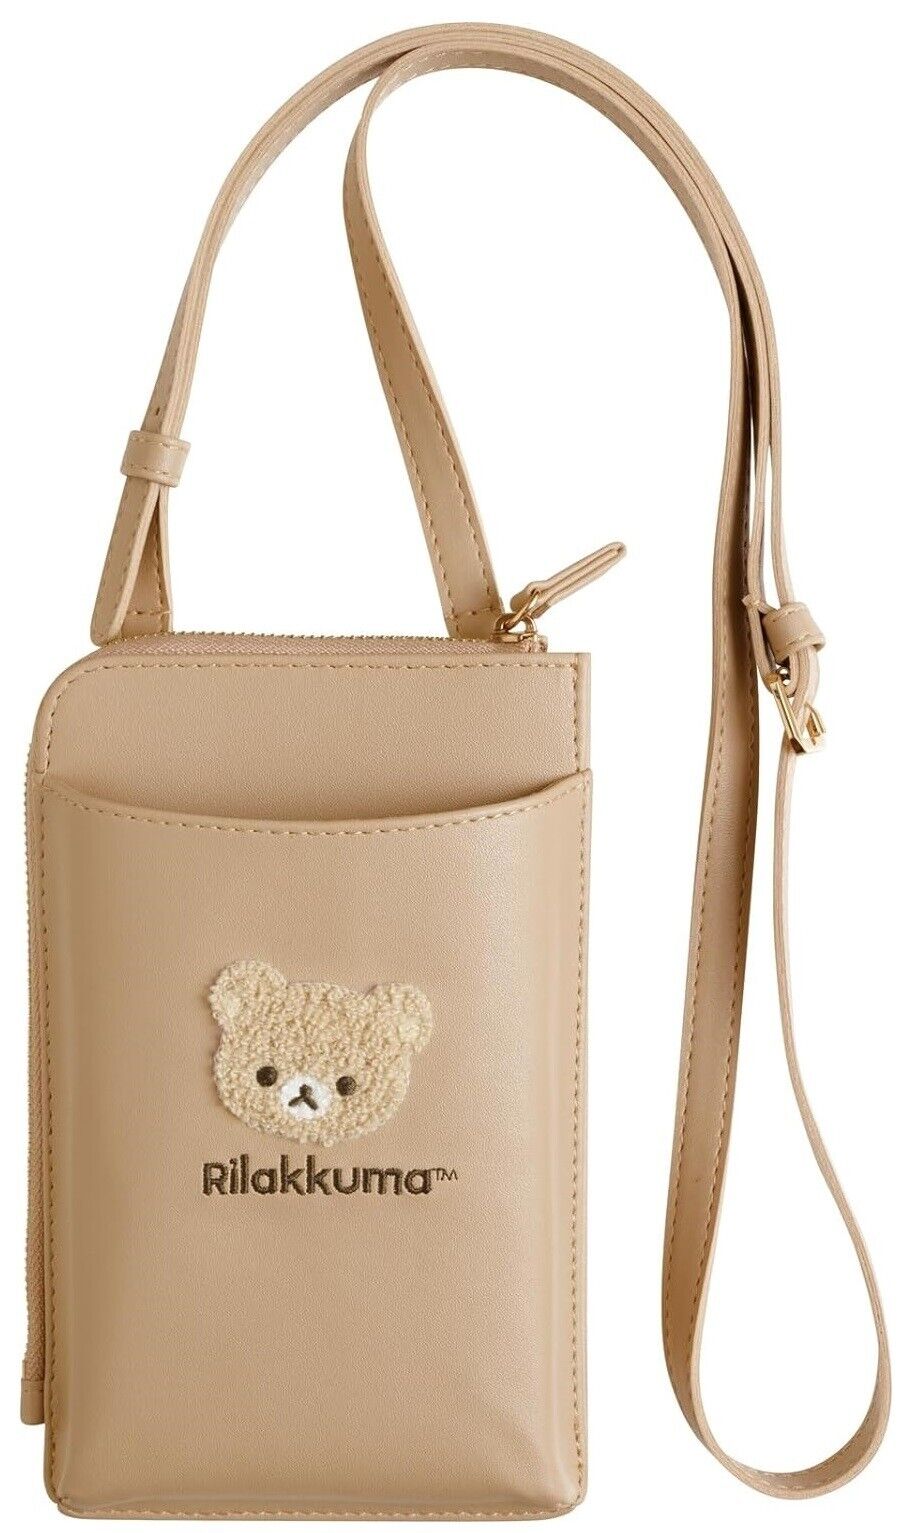 San-X Rilakkuma Smartphone Shoulder Bag Crossbody Small Purse Cell Phone Wallet